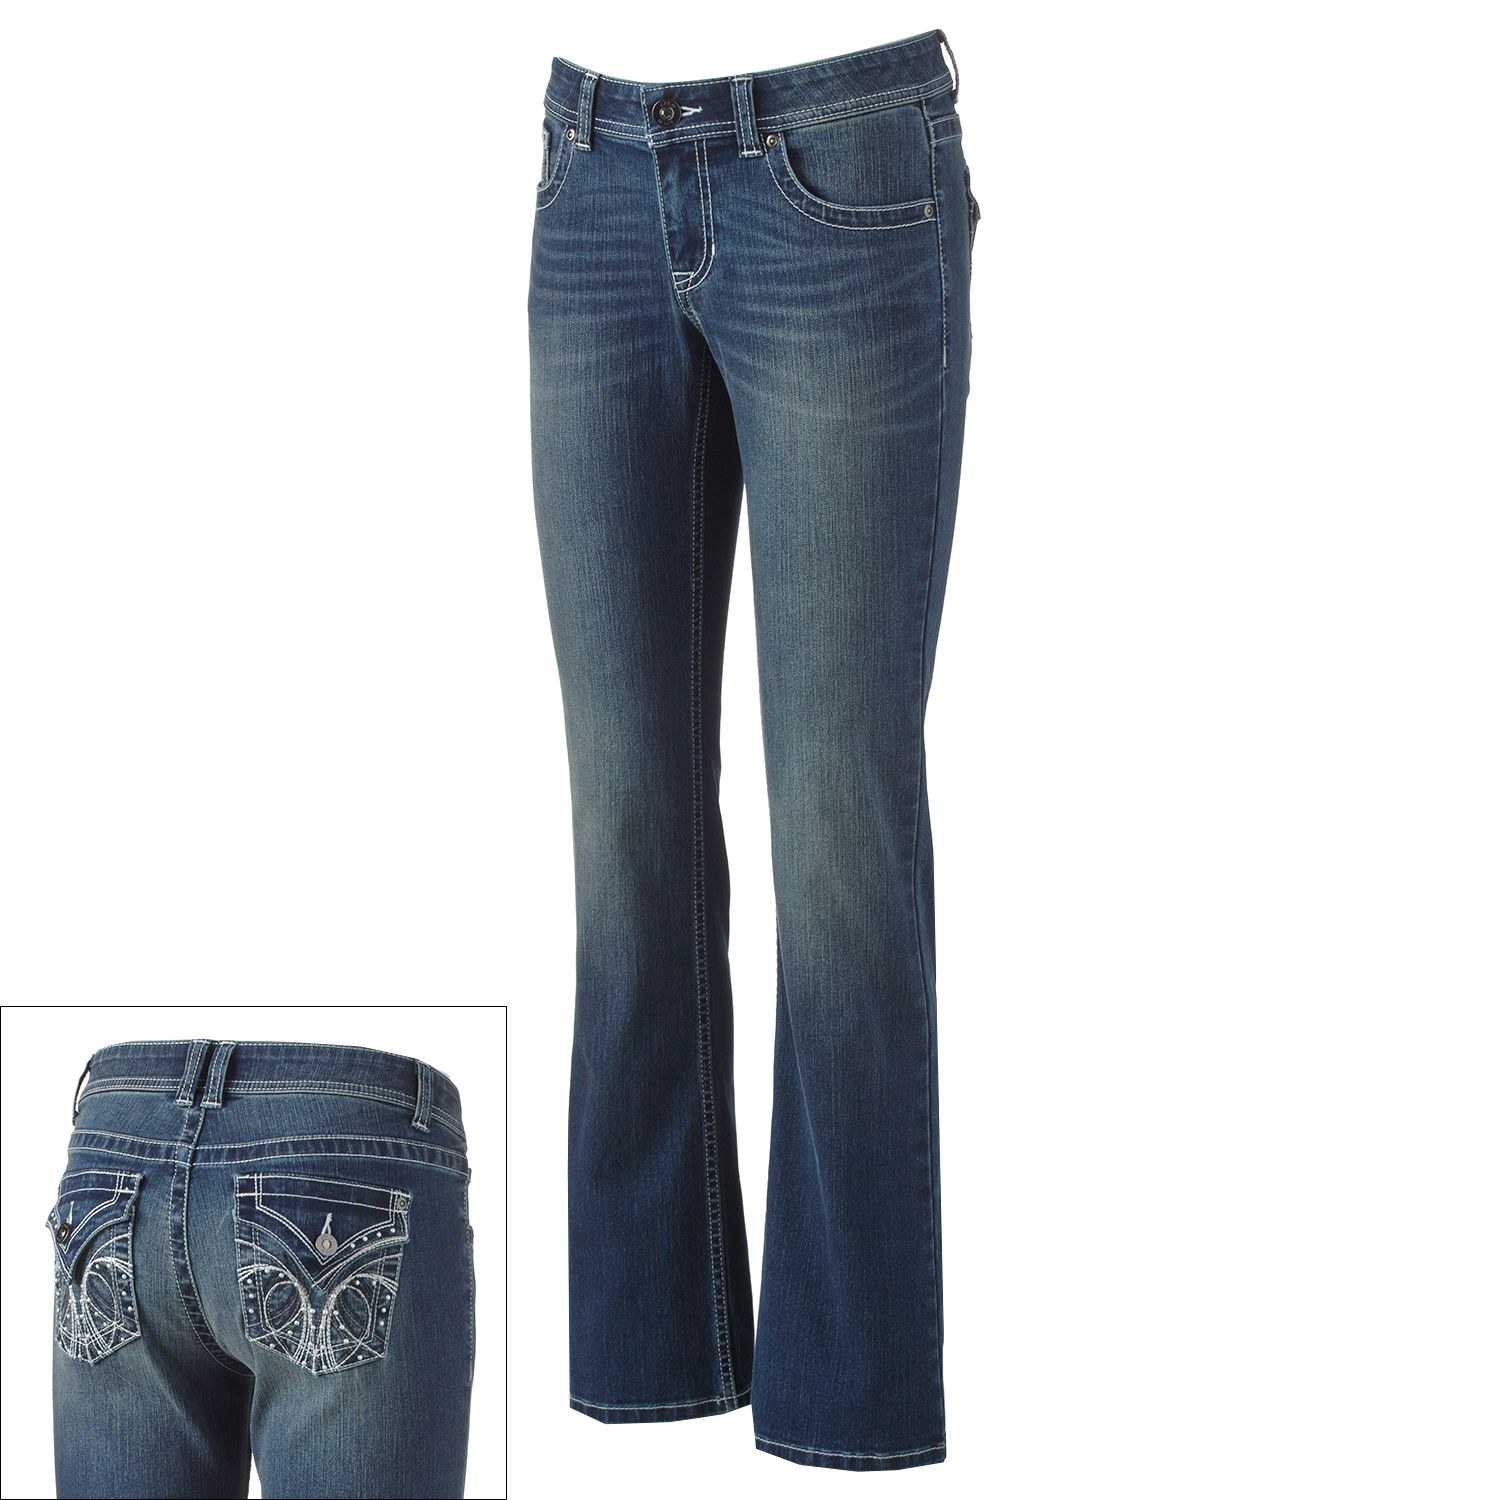 apt bootcut jeans